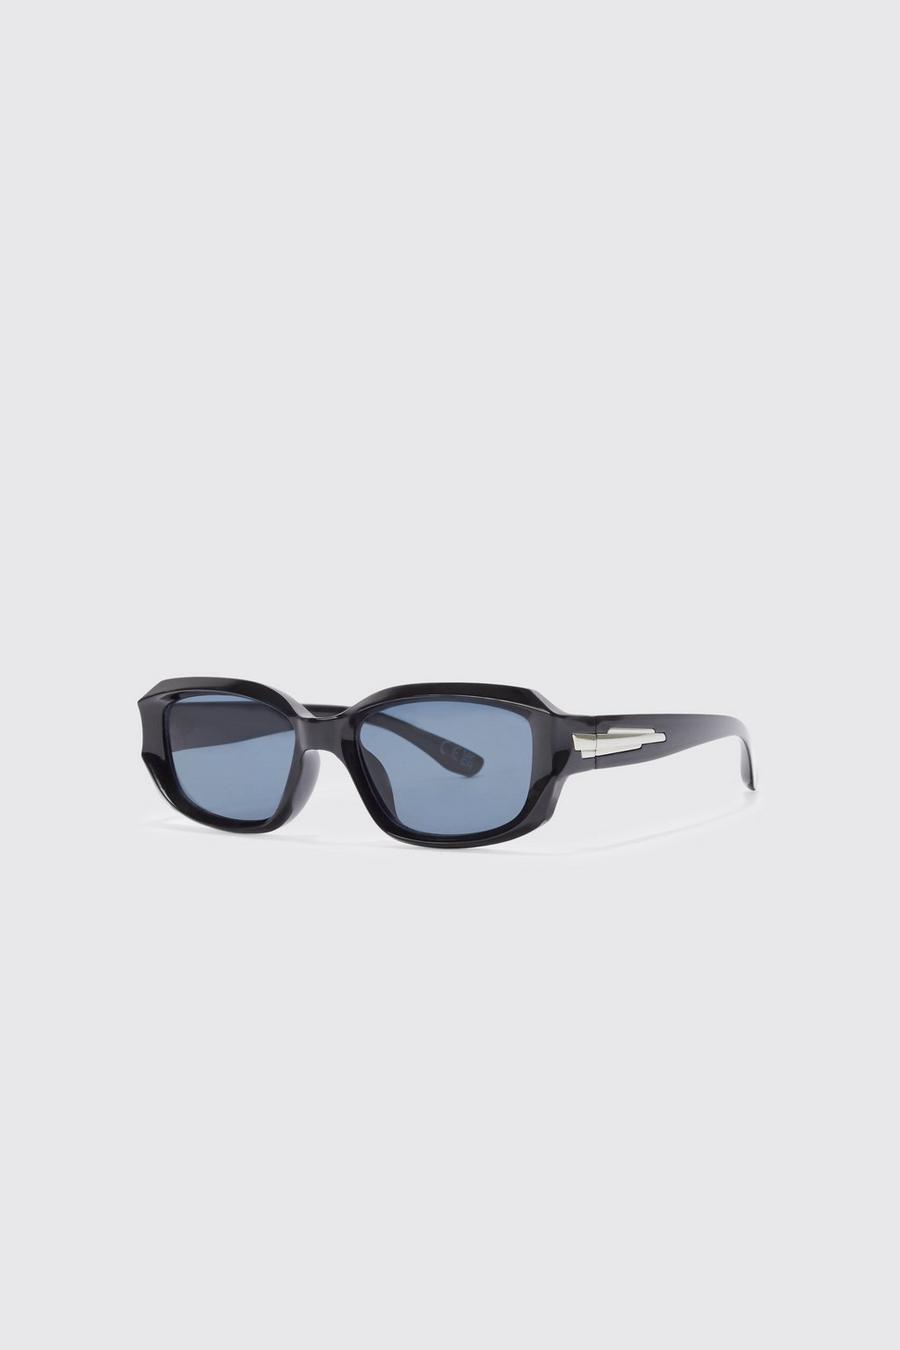 Gafas de sol rectangulares con detalle de bisagras, Black negro